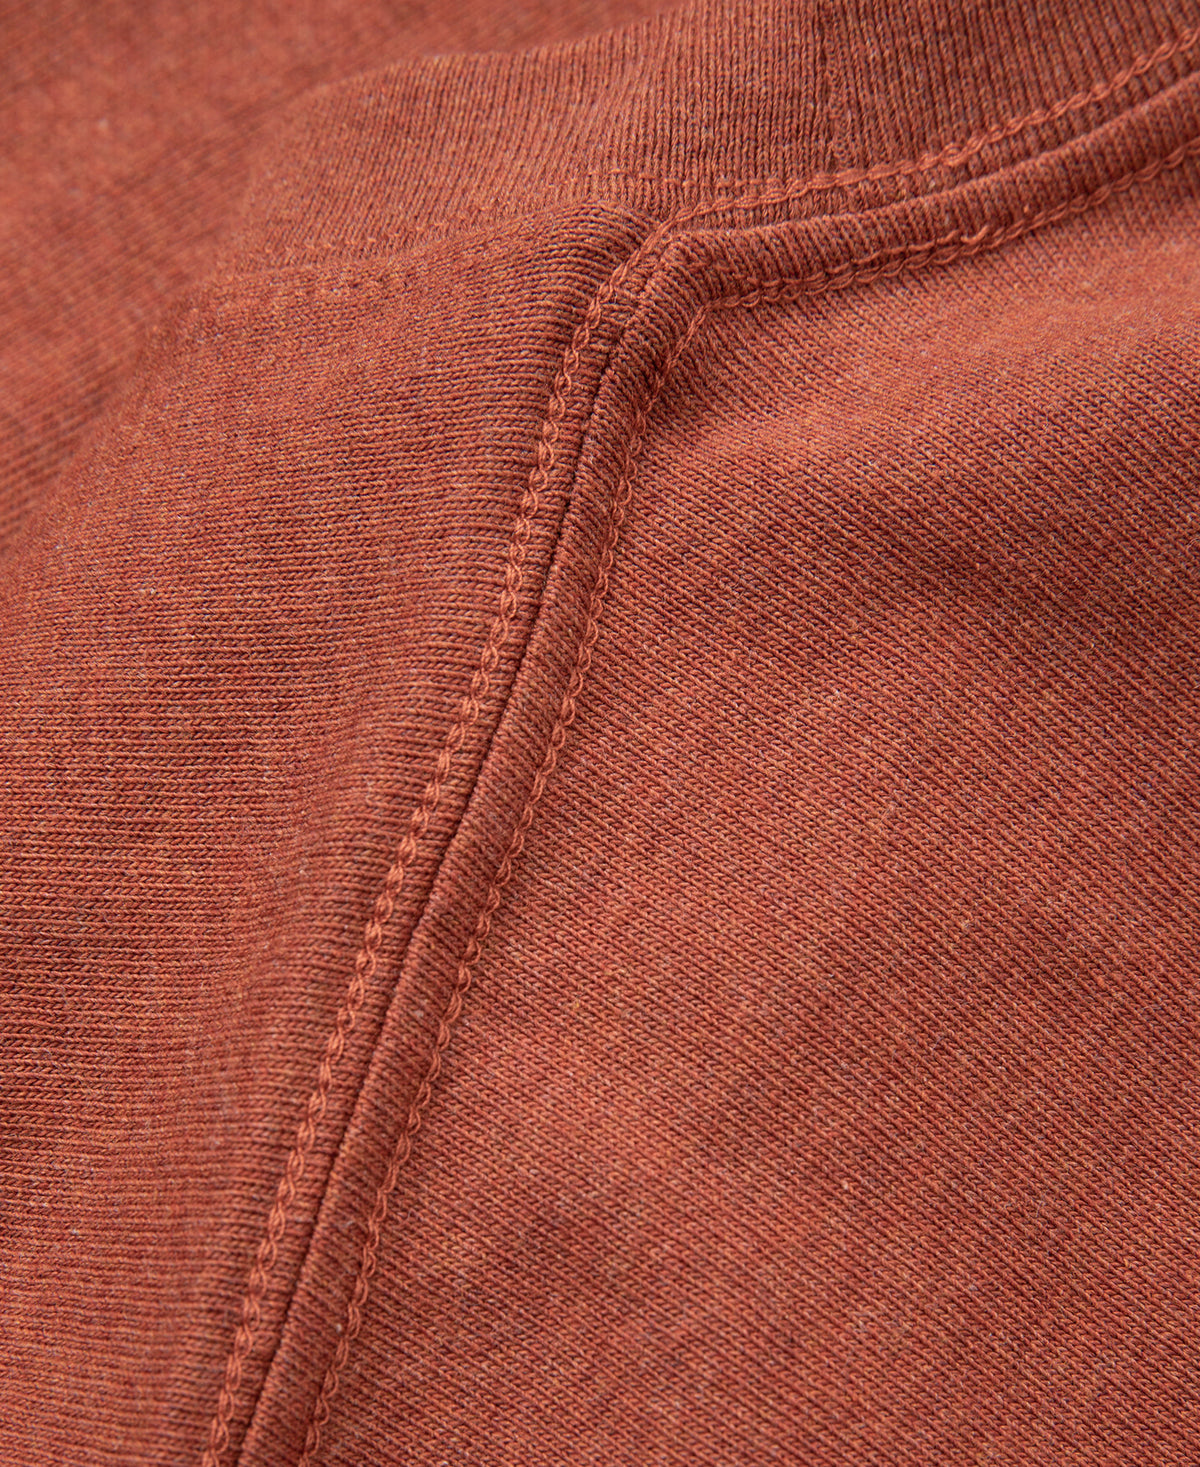 9 oz US Cotton Tubular T-Shirt - Orange Red